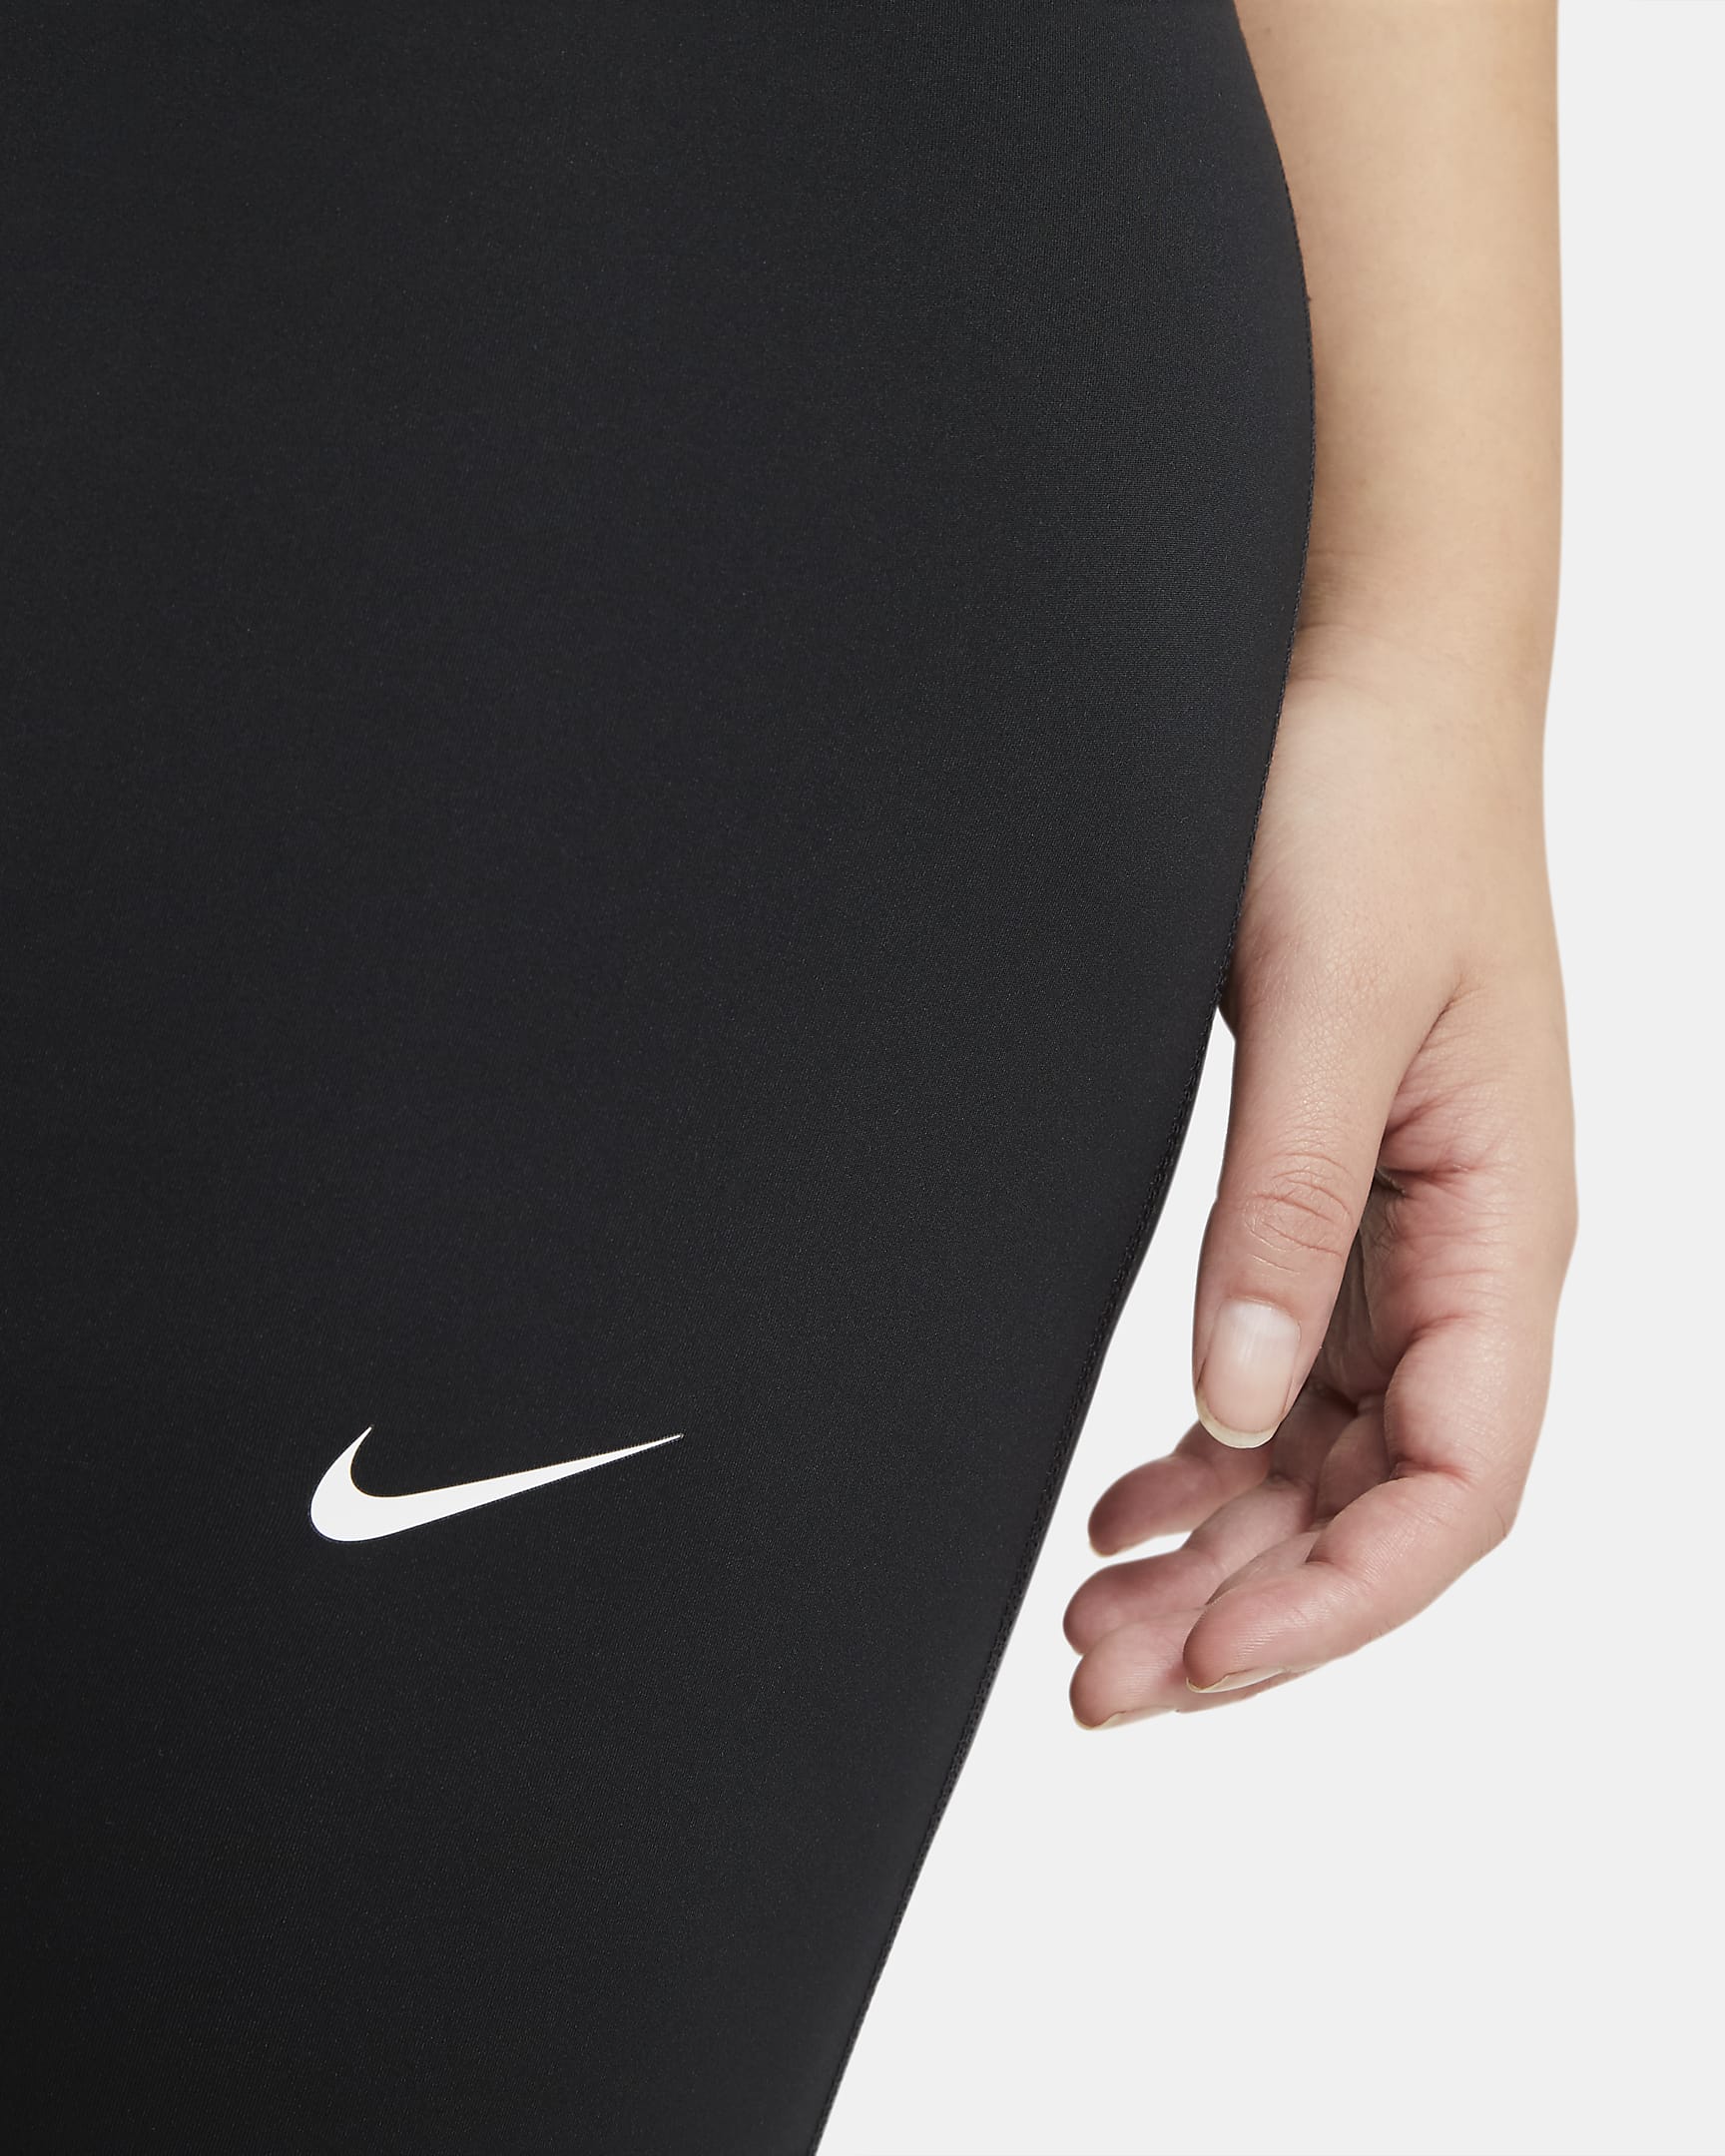 Nike Pro Women's Mid-Rise Crop Leggings (Plus Size). Nike.com